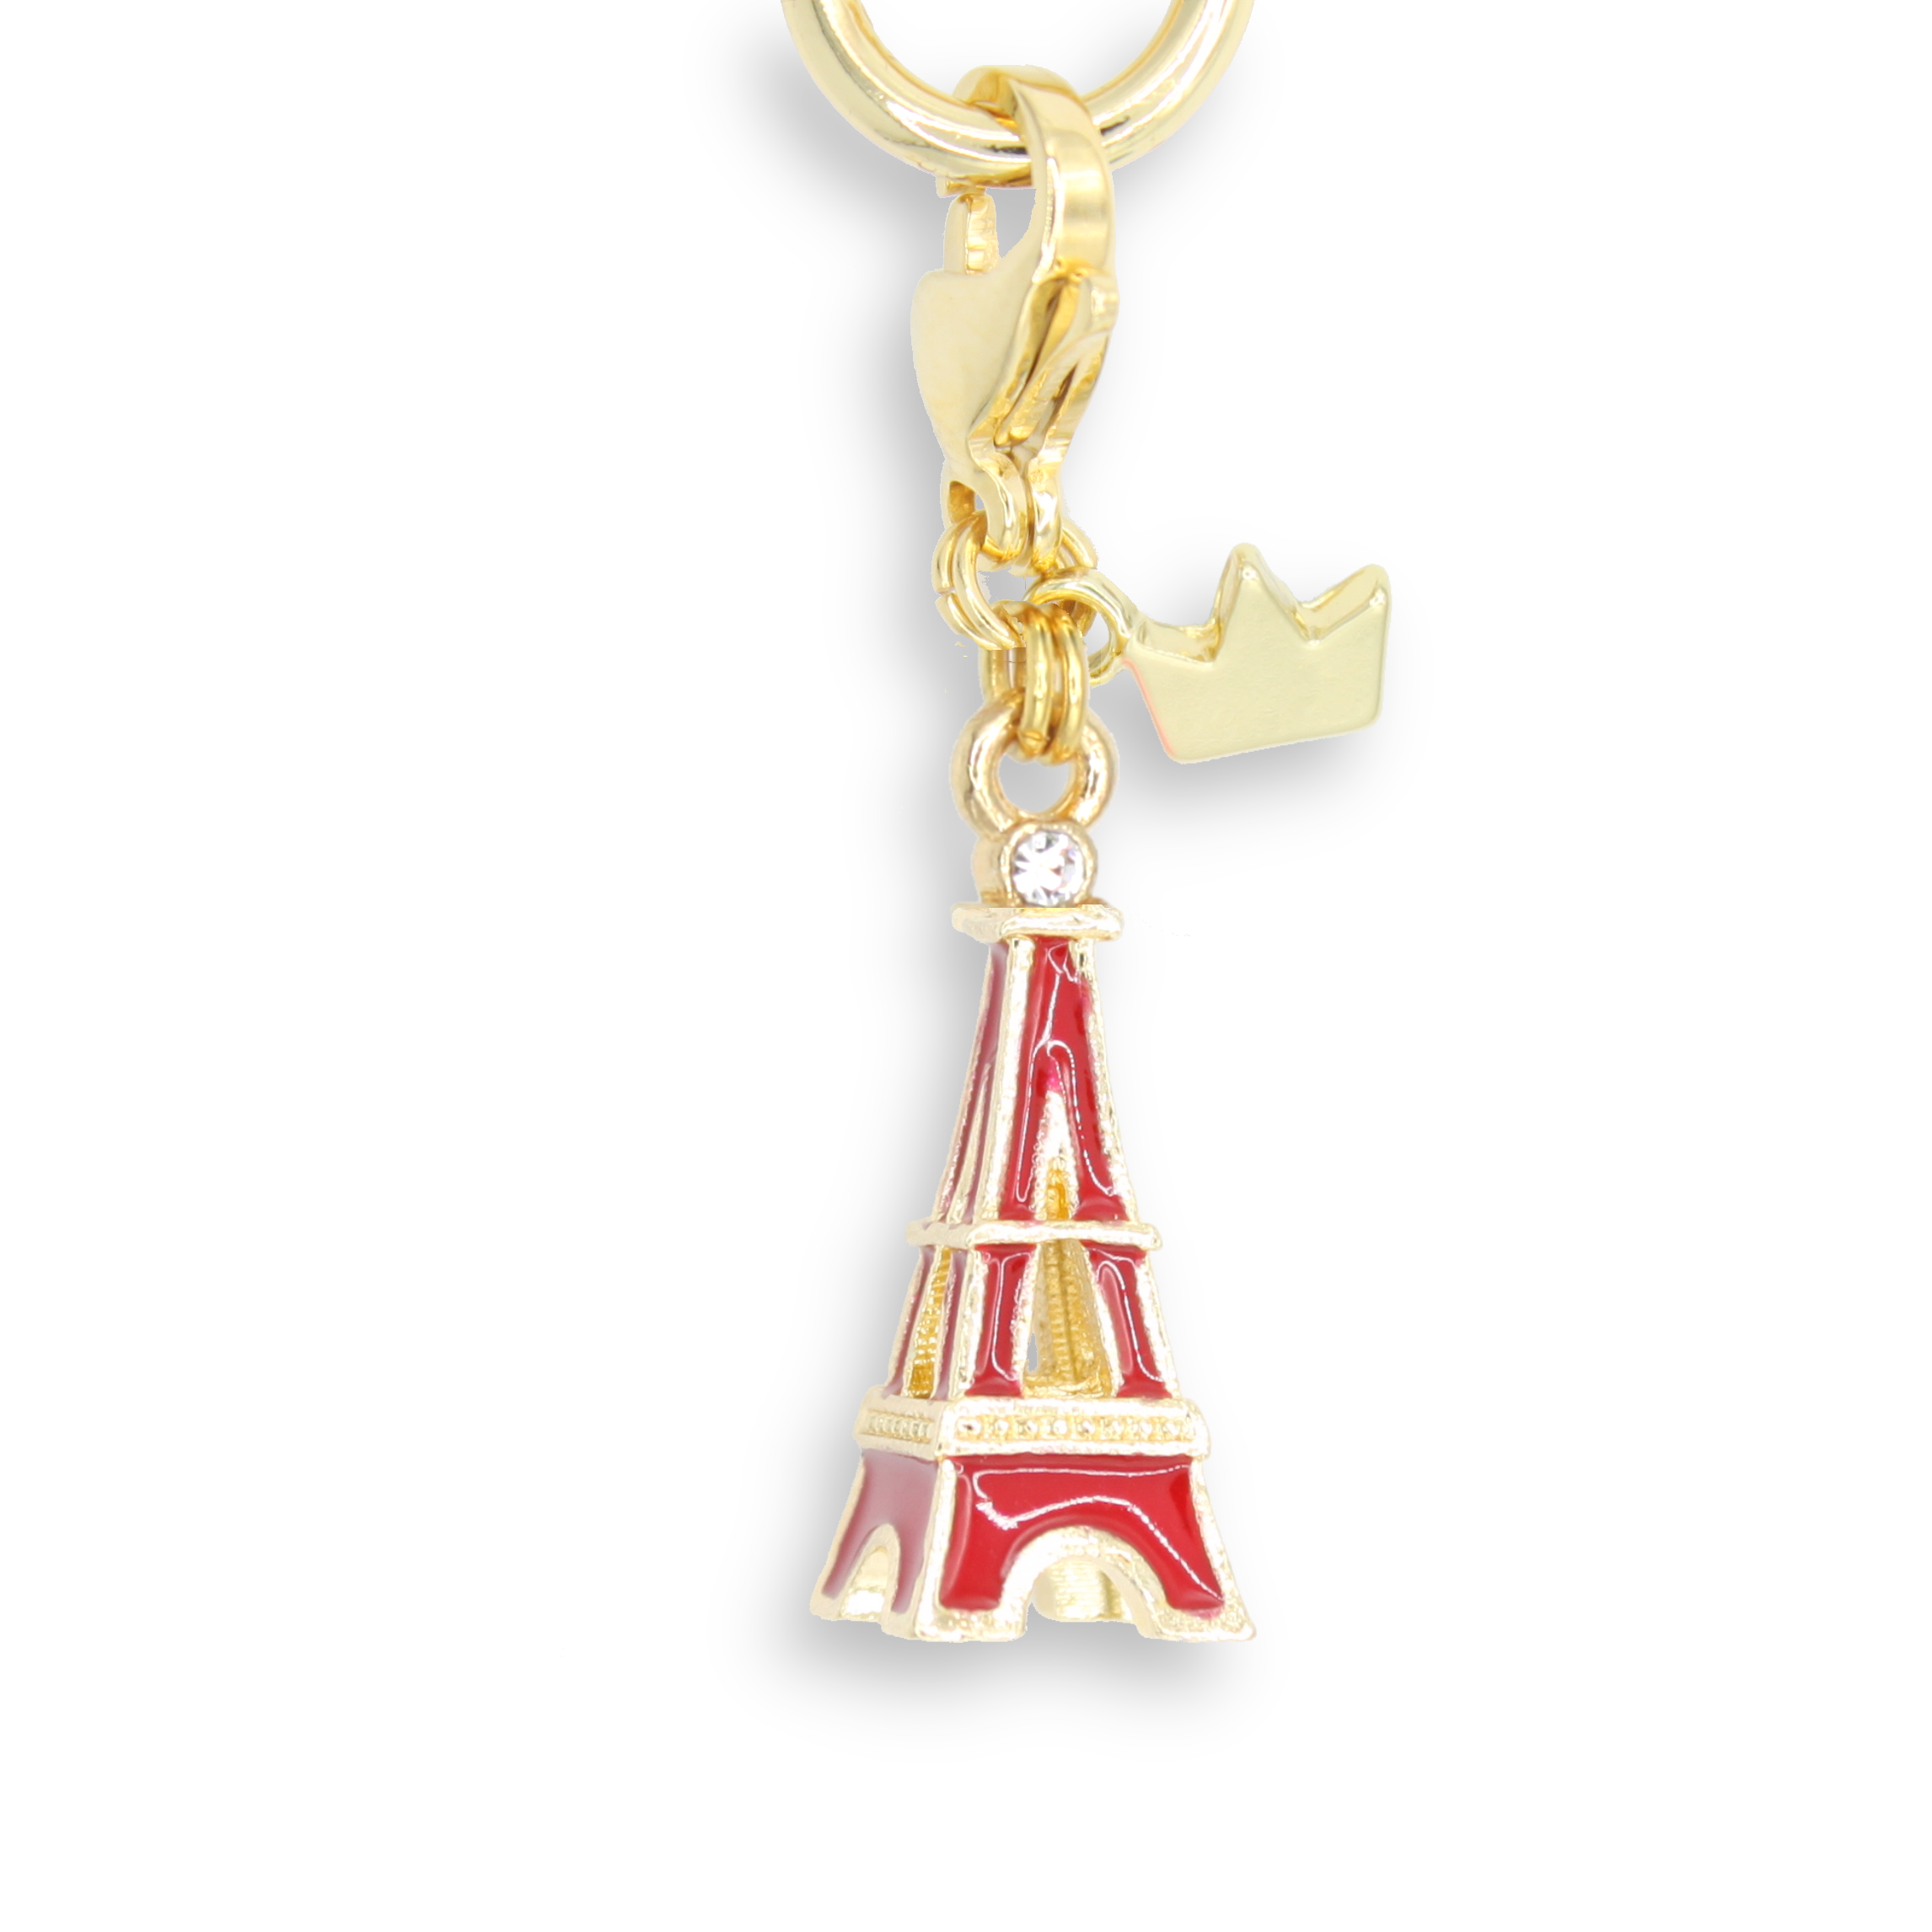 Braided Friendship Charm Bracelet in Brown - Eiffel Tower - Wing - Crown -  Heart - Star - Key - Bunny – ShopAA